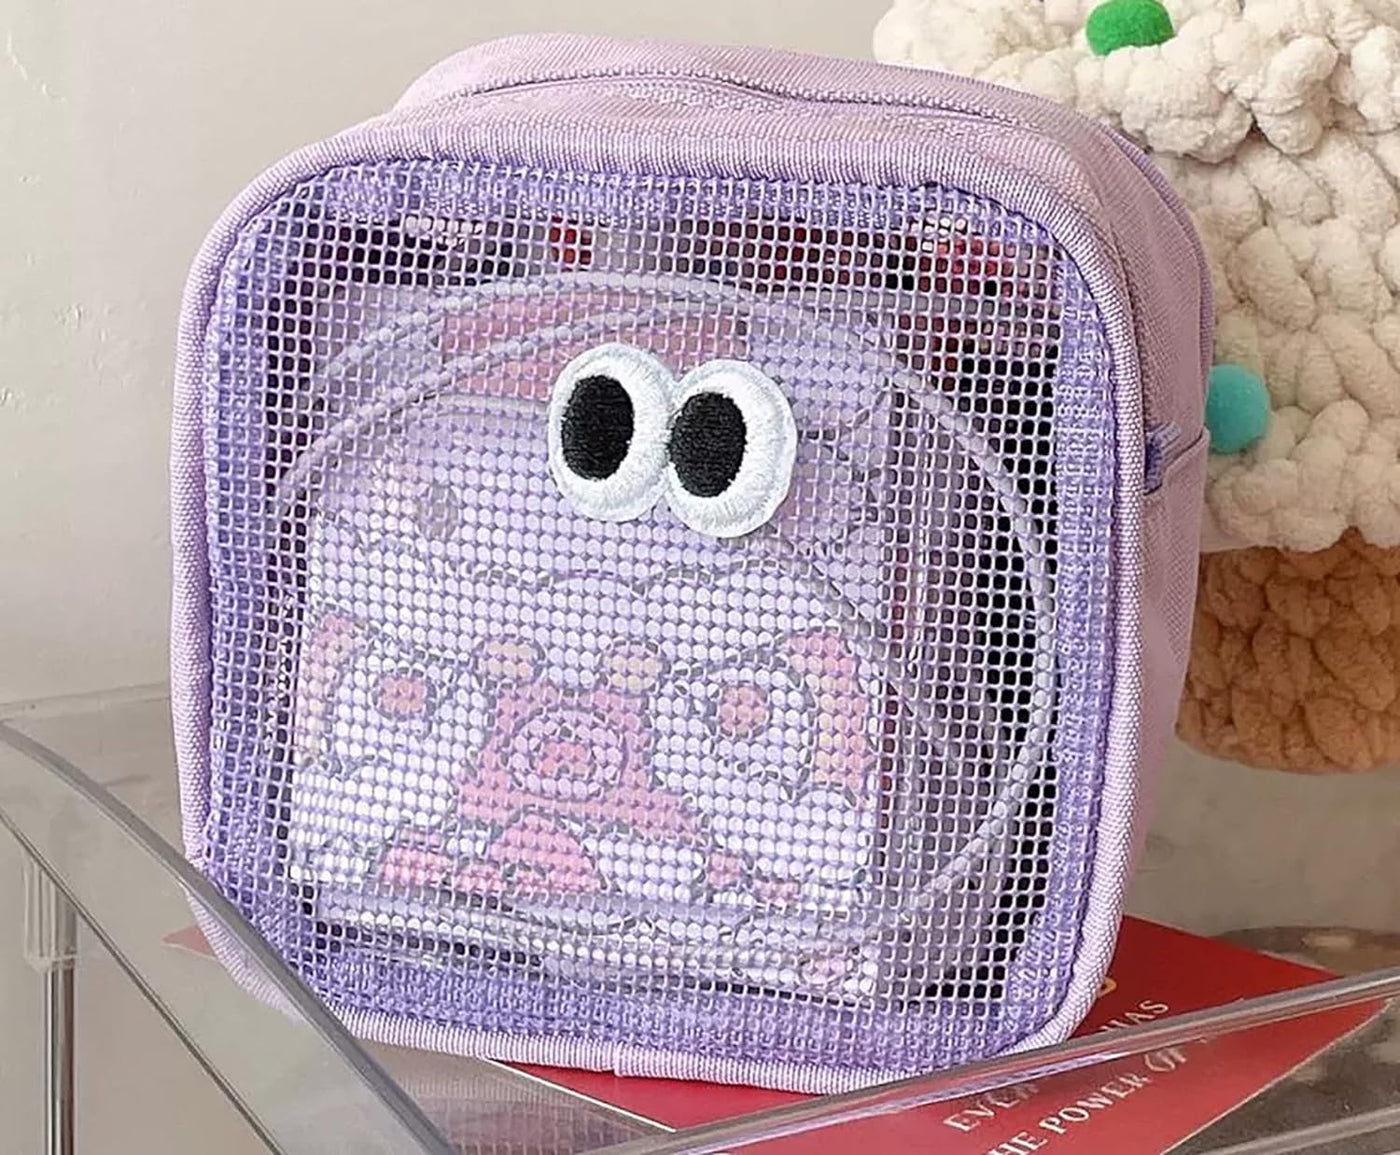 Cute Eye Mesh Cosmetic Bags-Purple